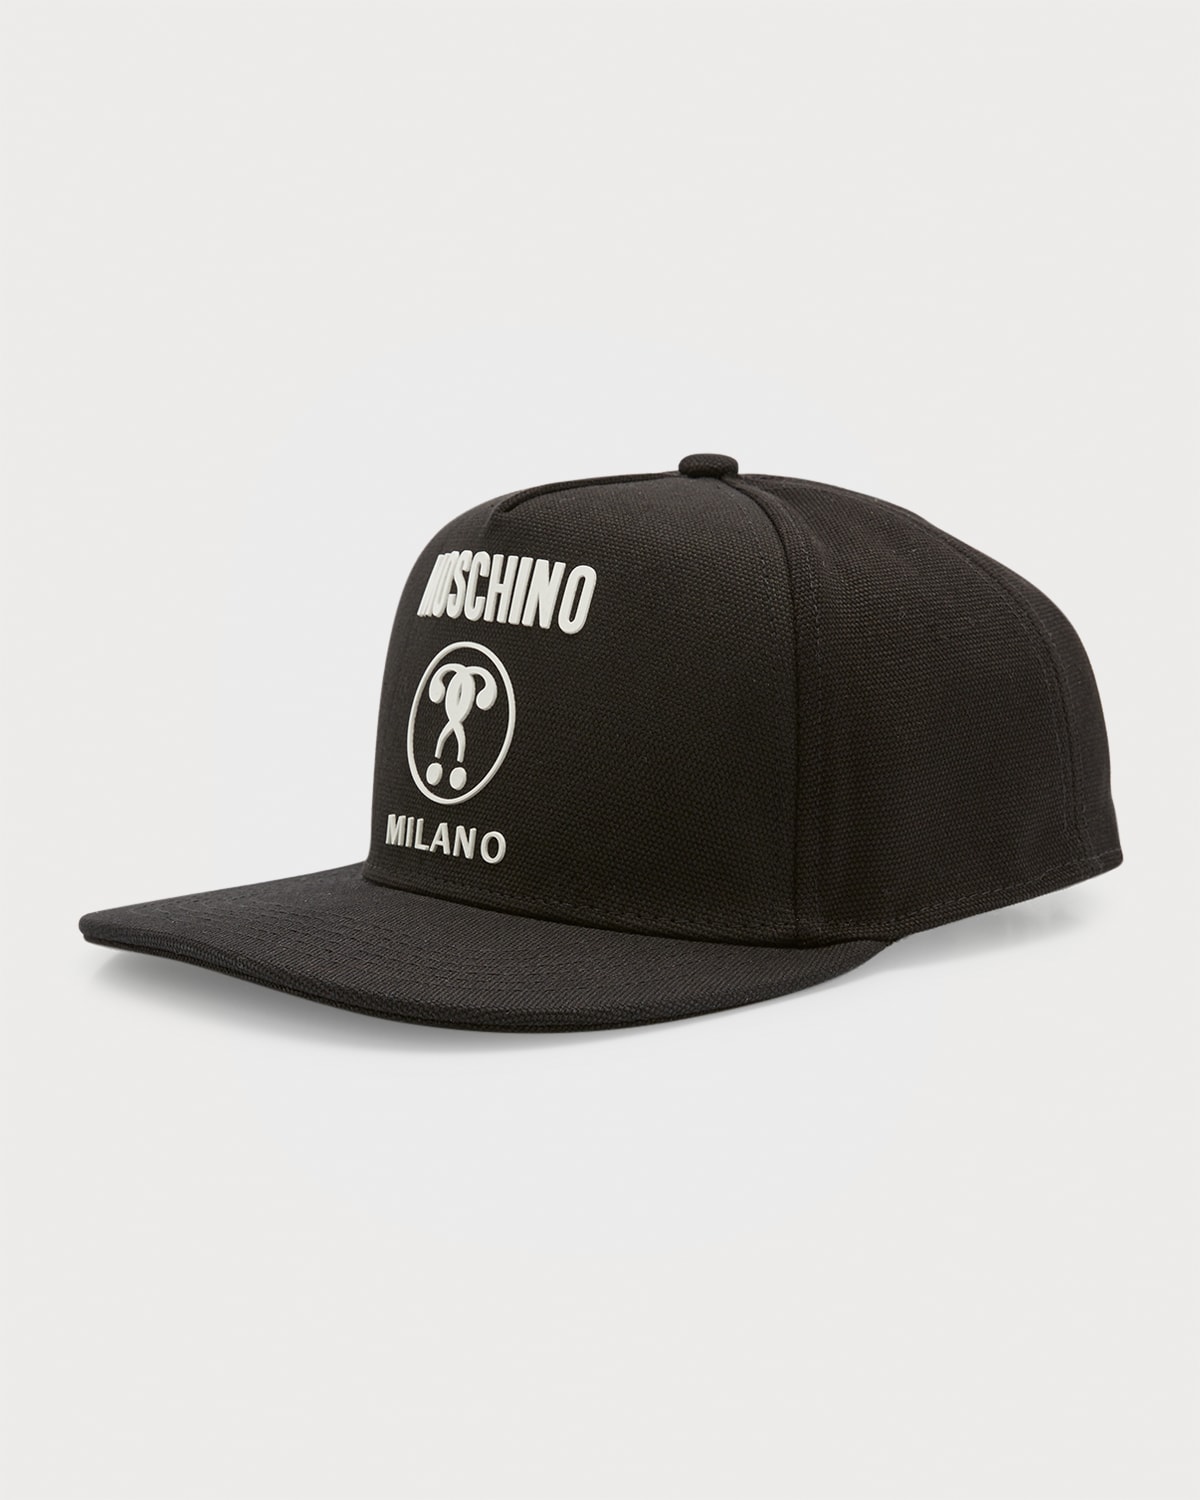 Moschino Men's Cappello Flat Brim Logo Baseball Cap In Black